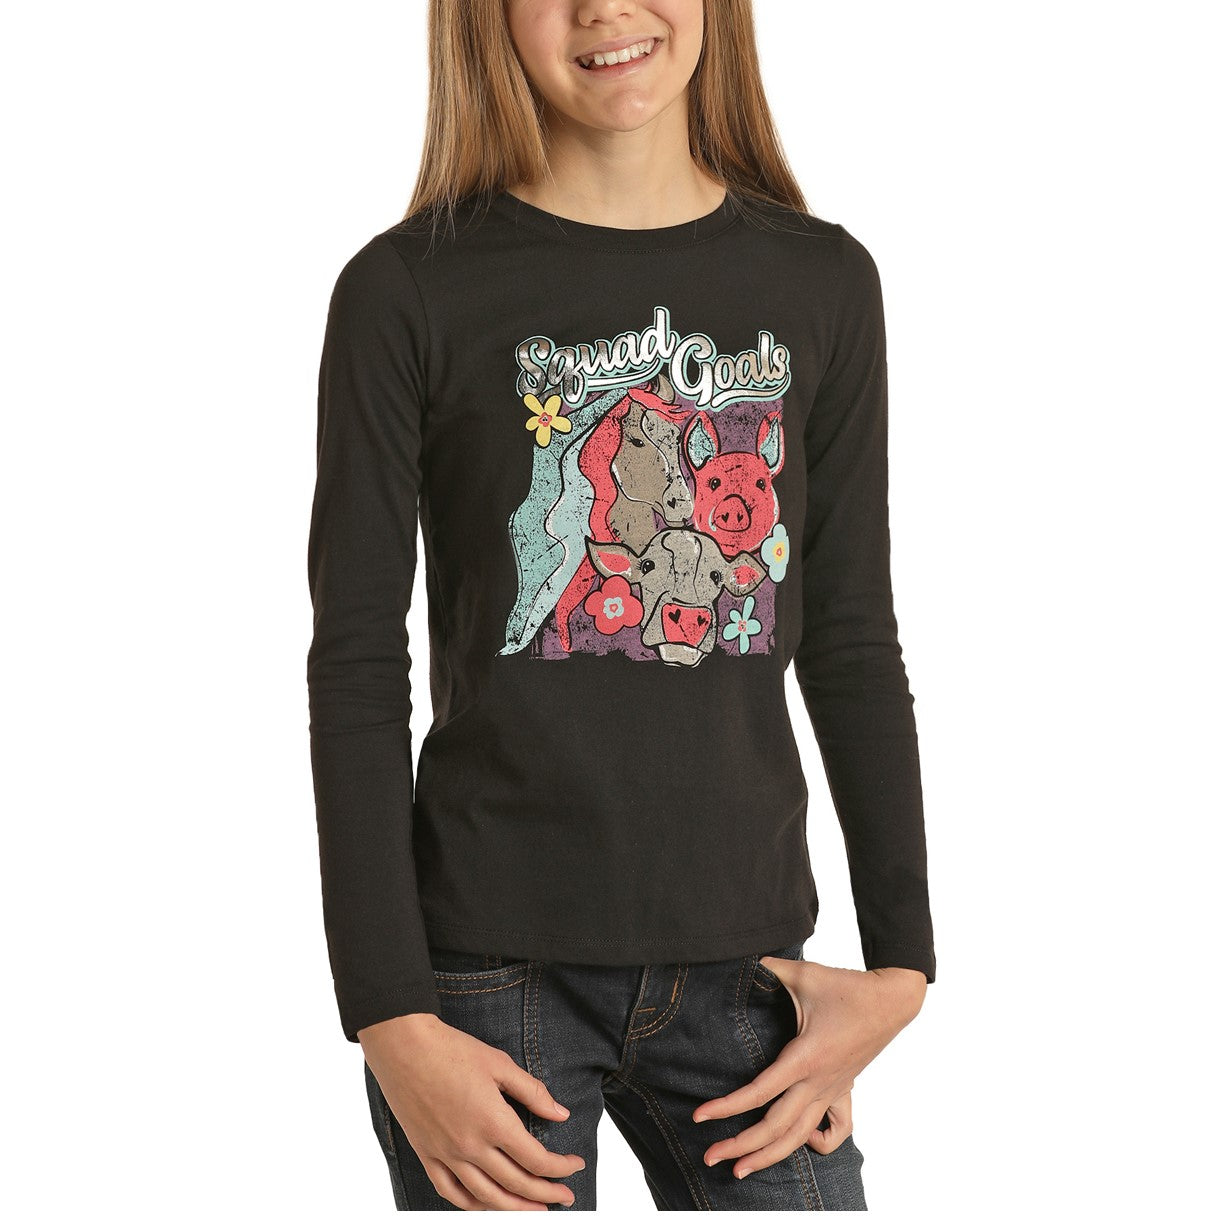 Rock & Roll Cowgirl Children's Squad Goals Black T-Shirt G4T1557-01